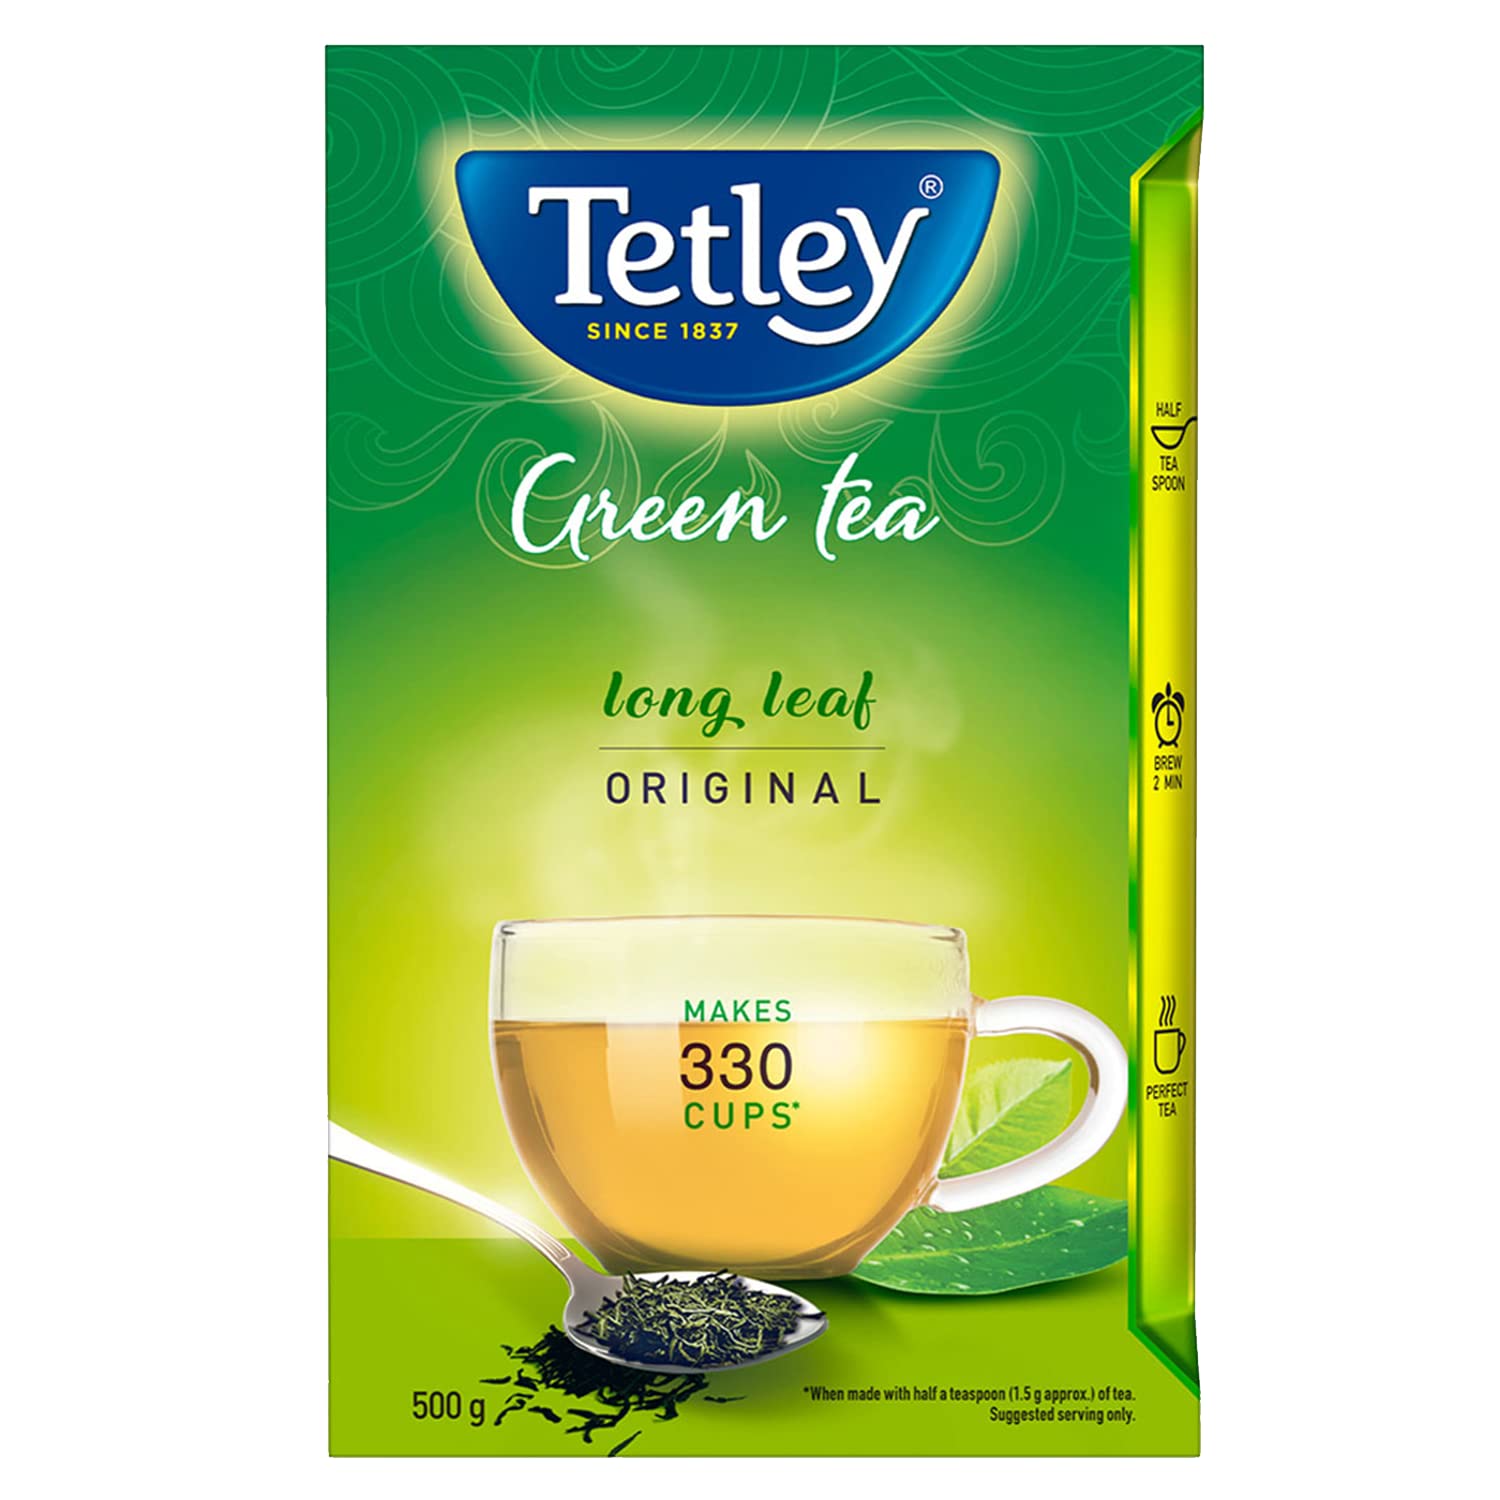 tetley-long-leaf-original-tea-brands